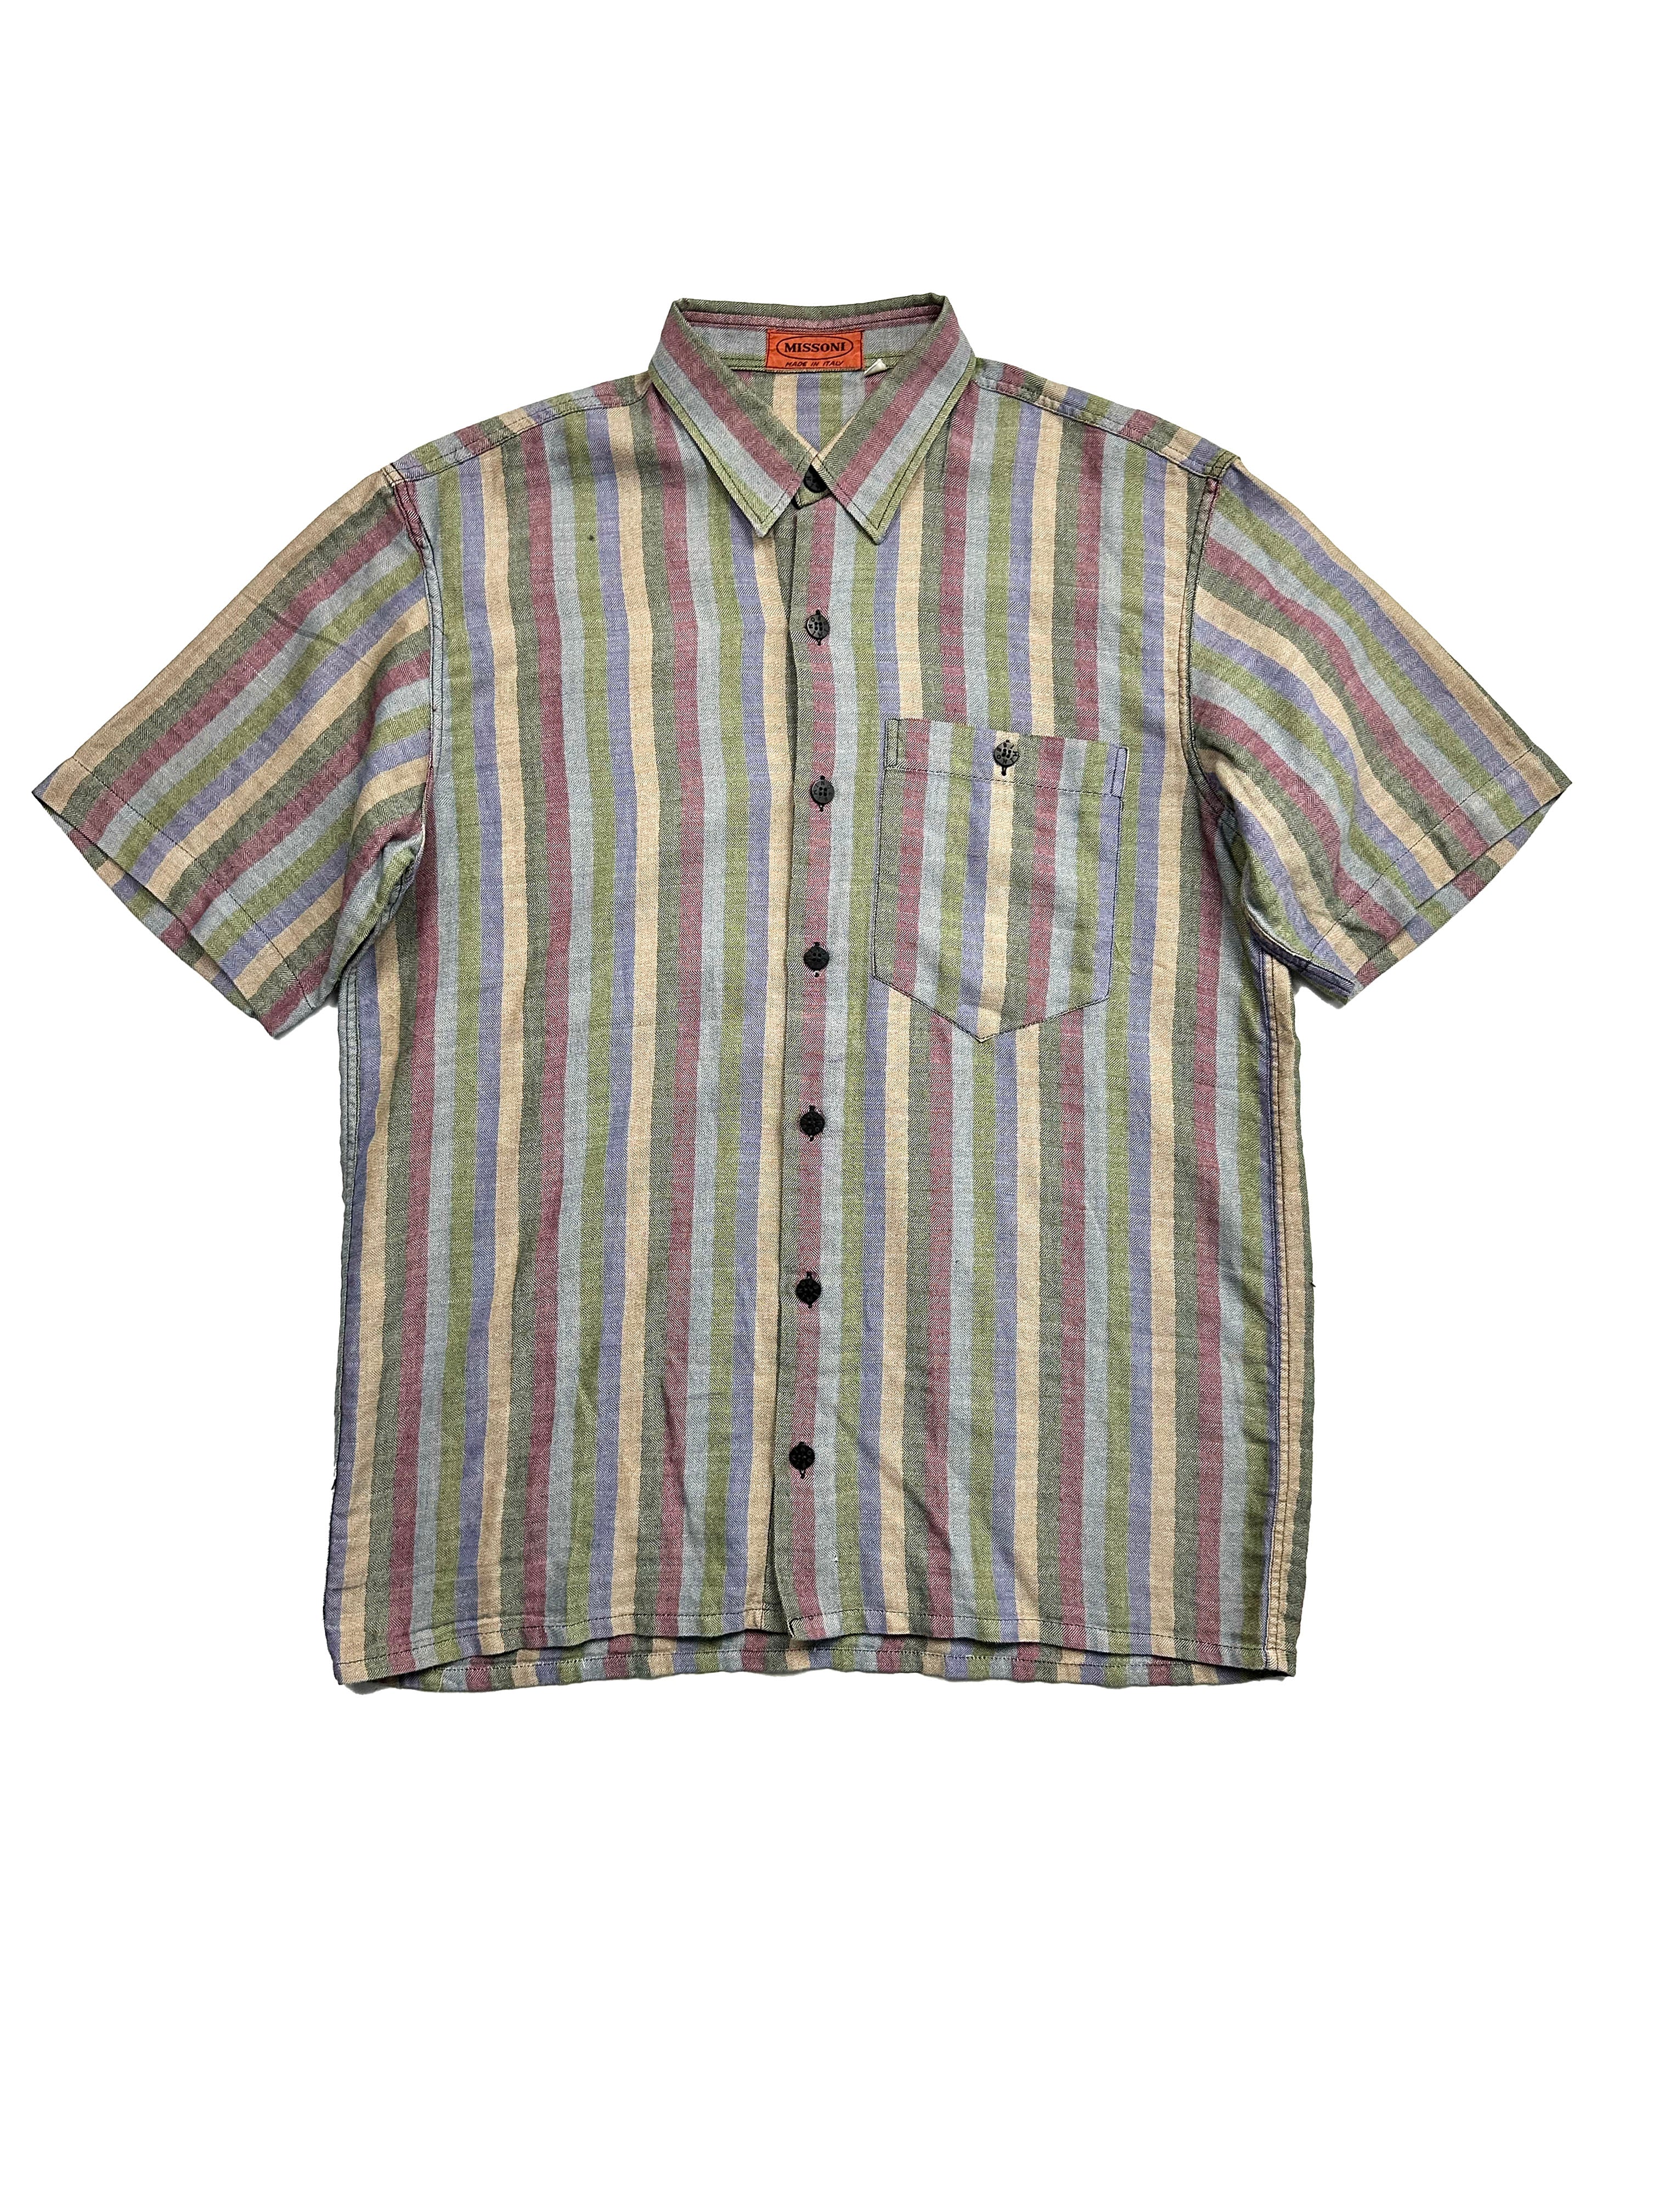 Missoni Patterned Shirt 90's